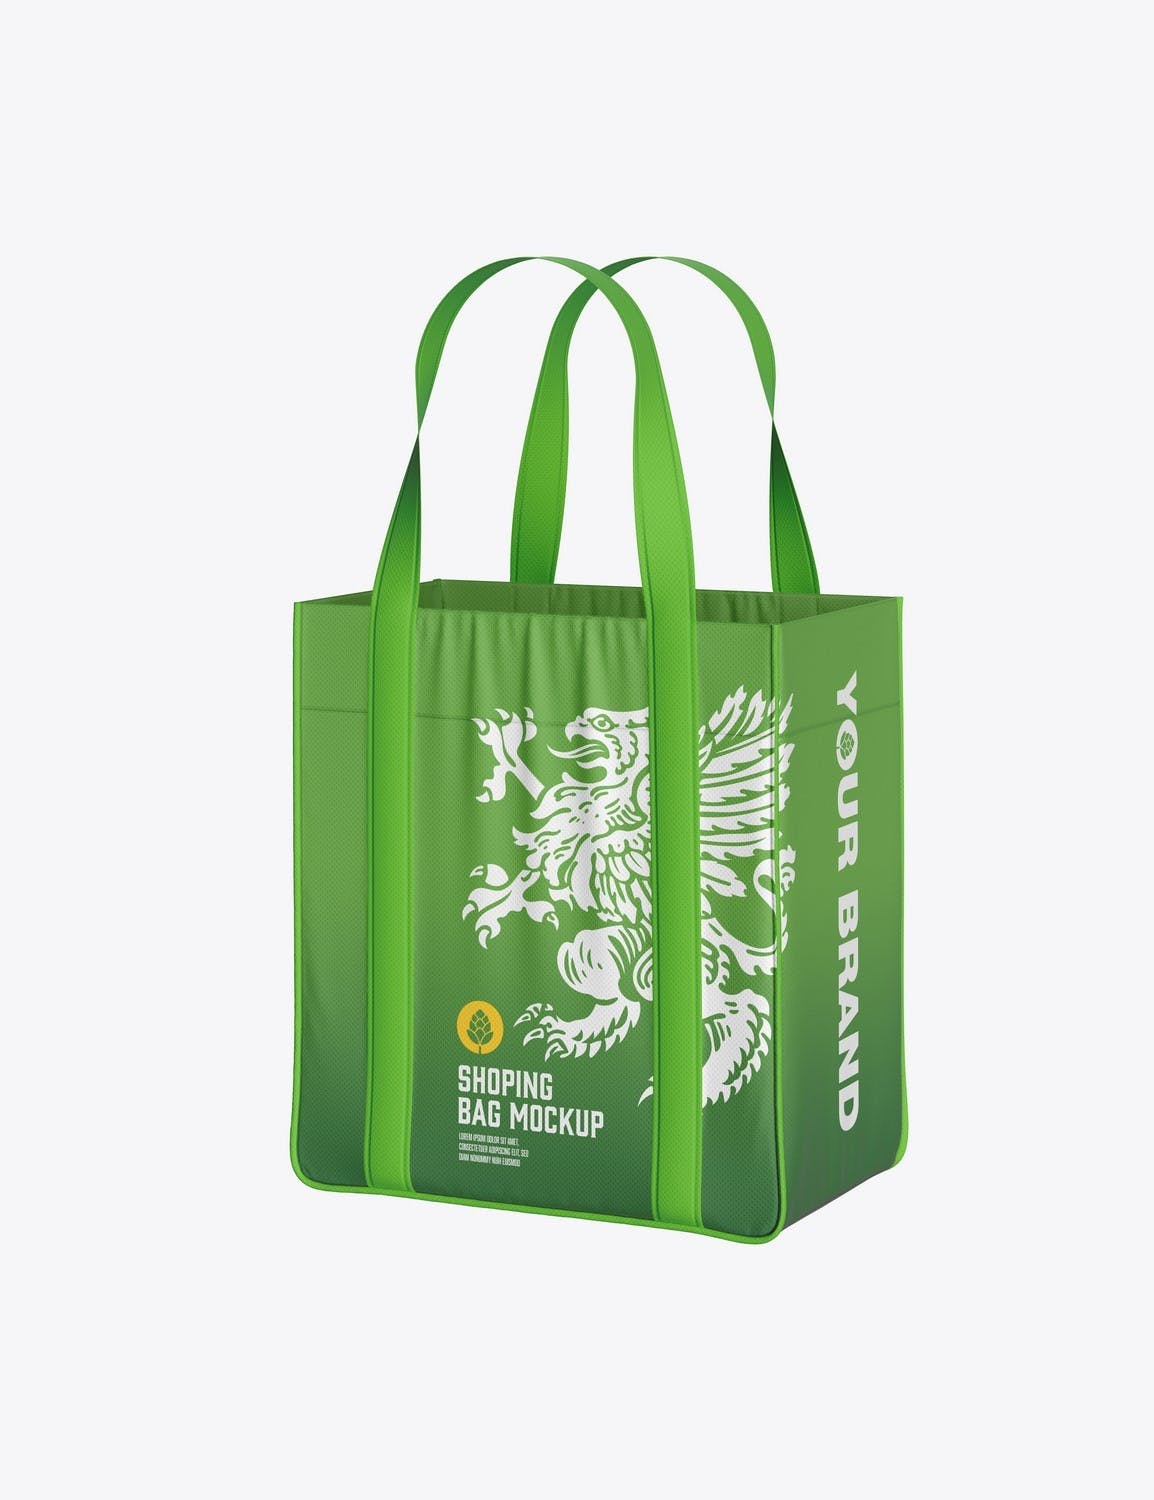 生态帆布袋包装Logo设计样机 Eco Canvas Bag Mockup 样机素材 第4张